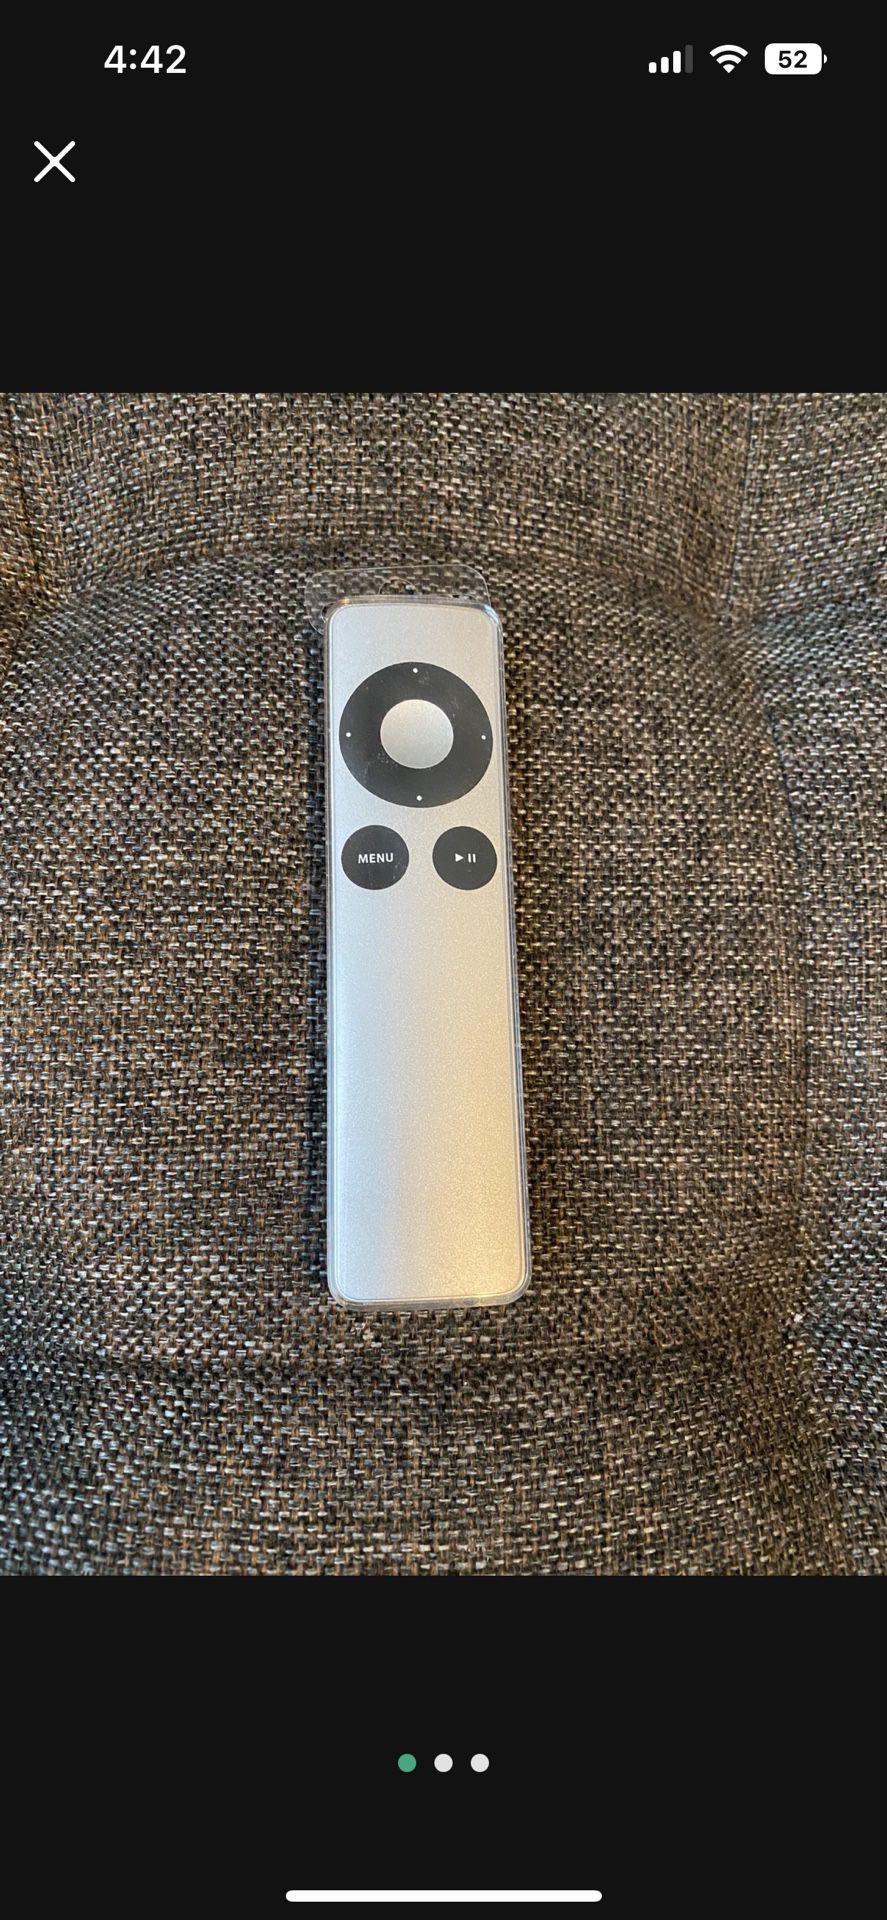 Apple TV Remote (brand new)